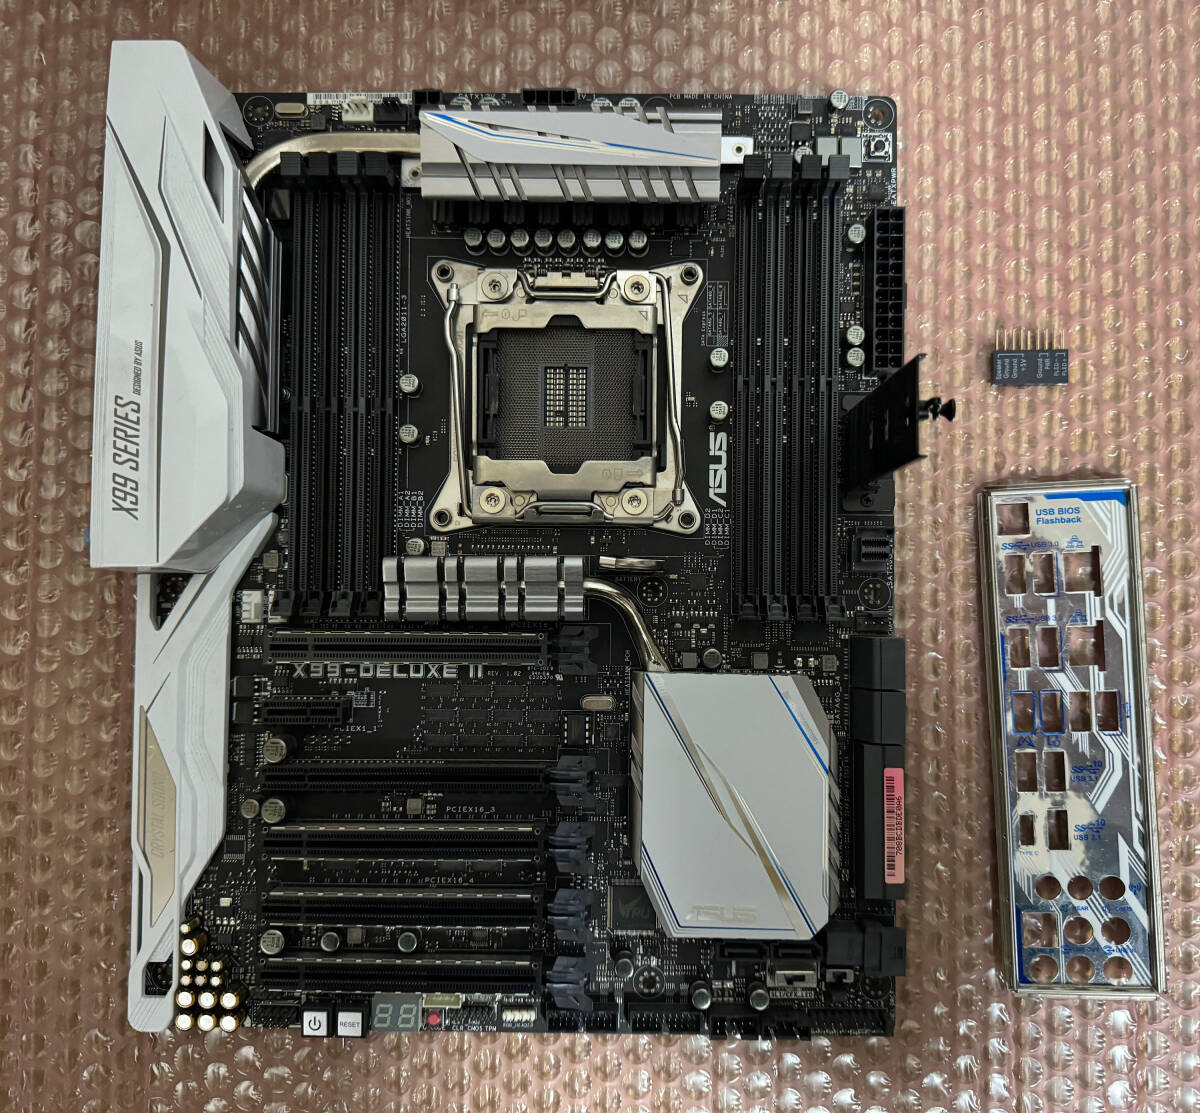 ASUS X99 Deluxe II Intel LGA2011-3 マザーボード 動作確認済み ATX_画像1